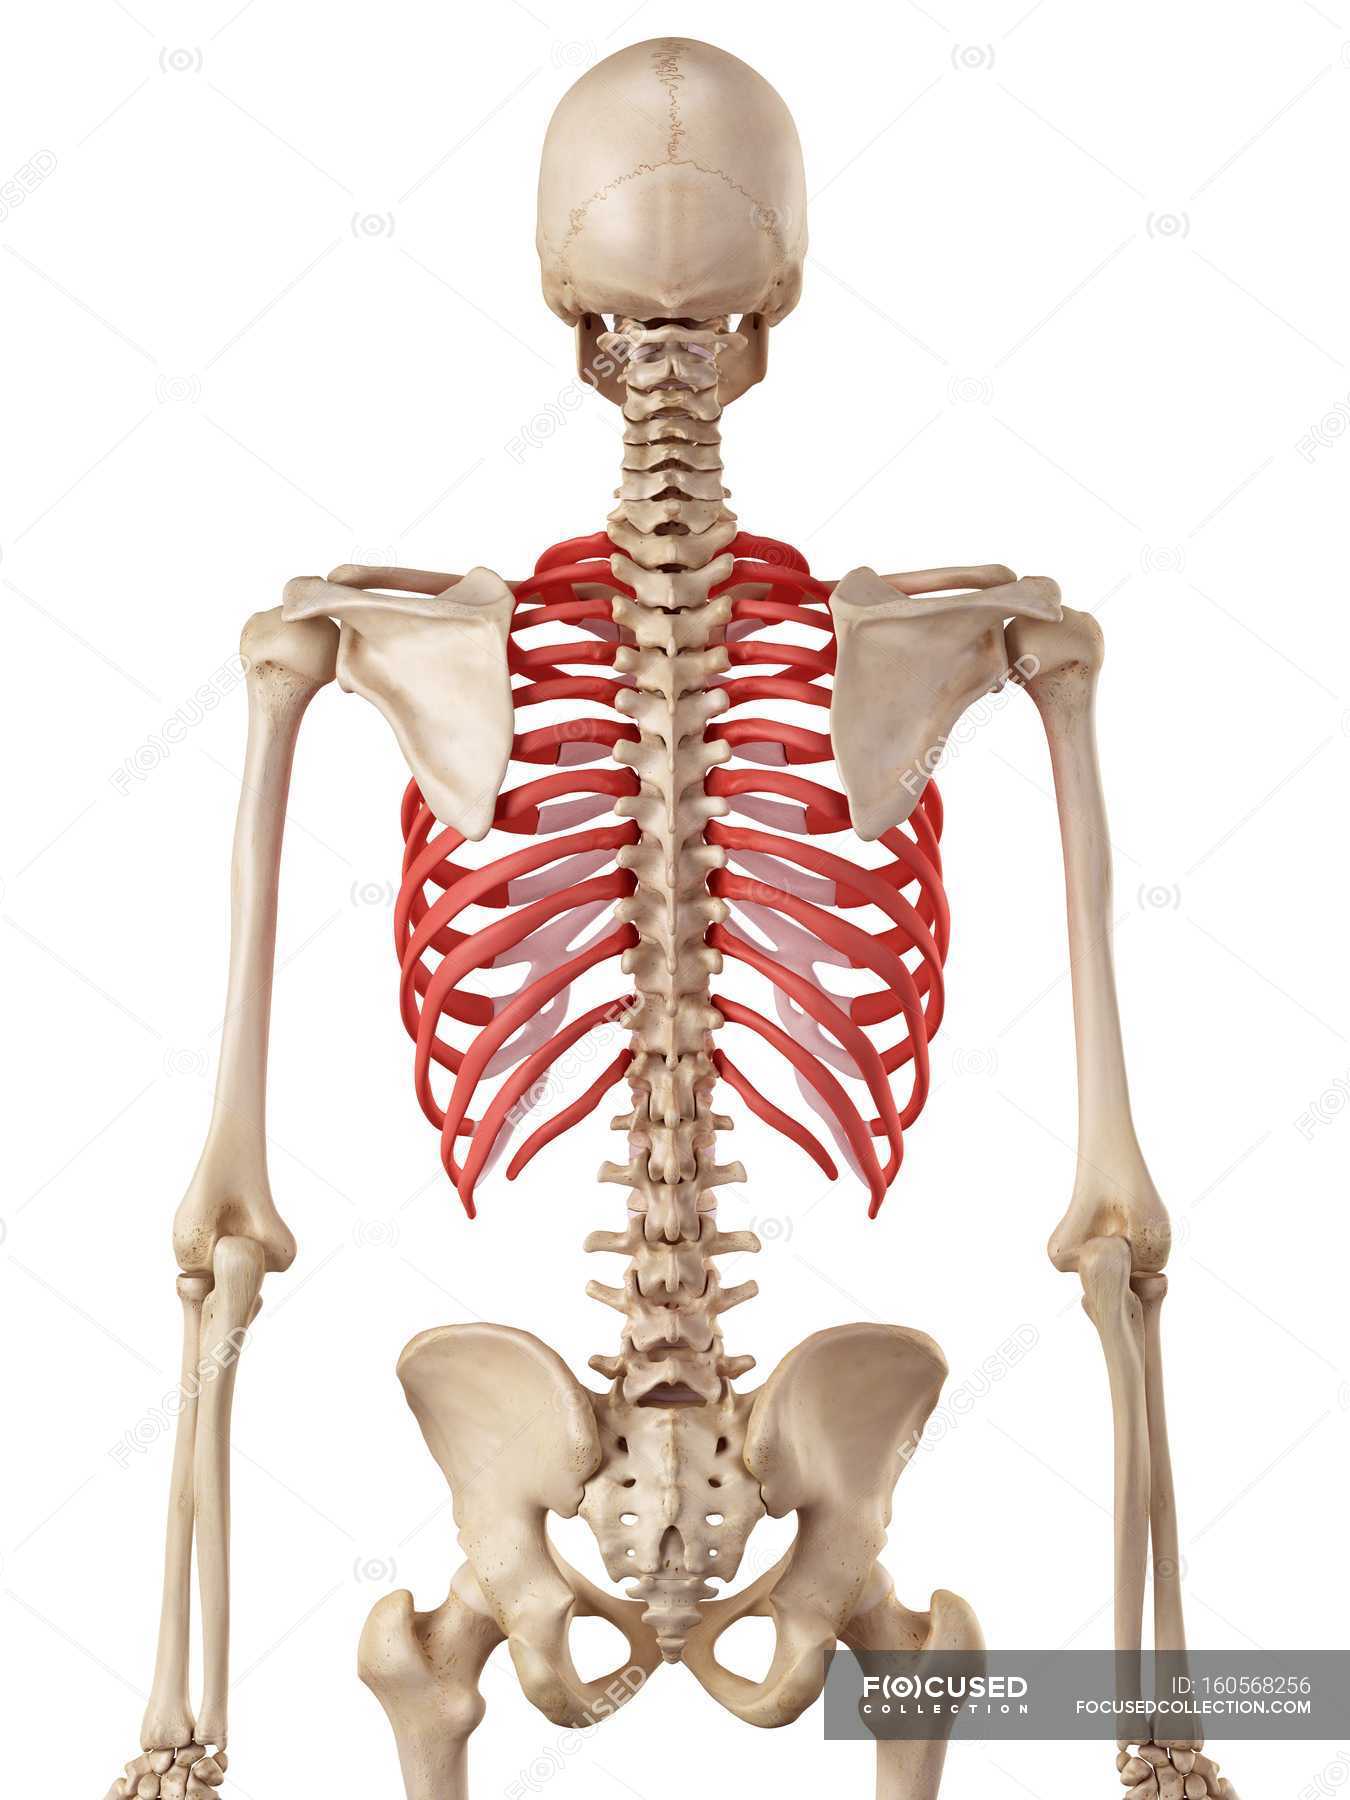 Human rib cage anatomy — human physiology, osteology ...